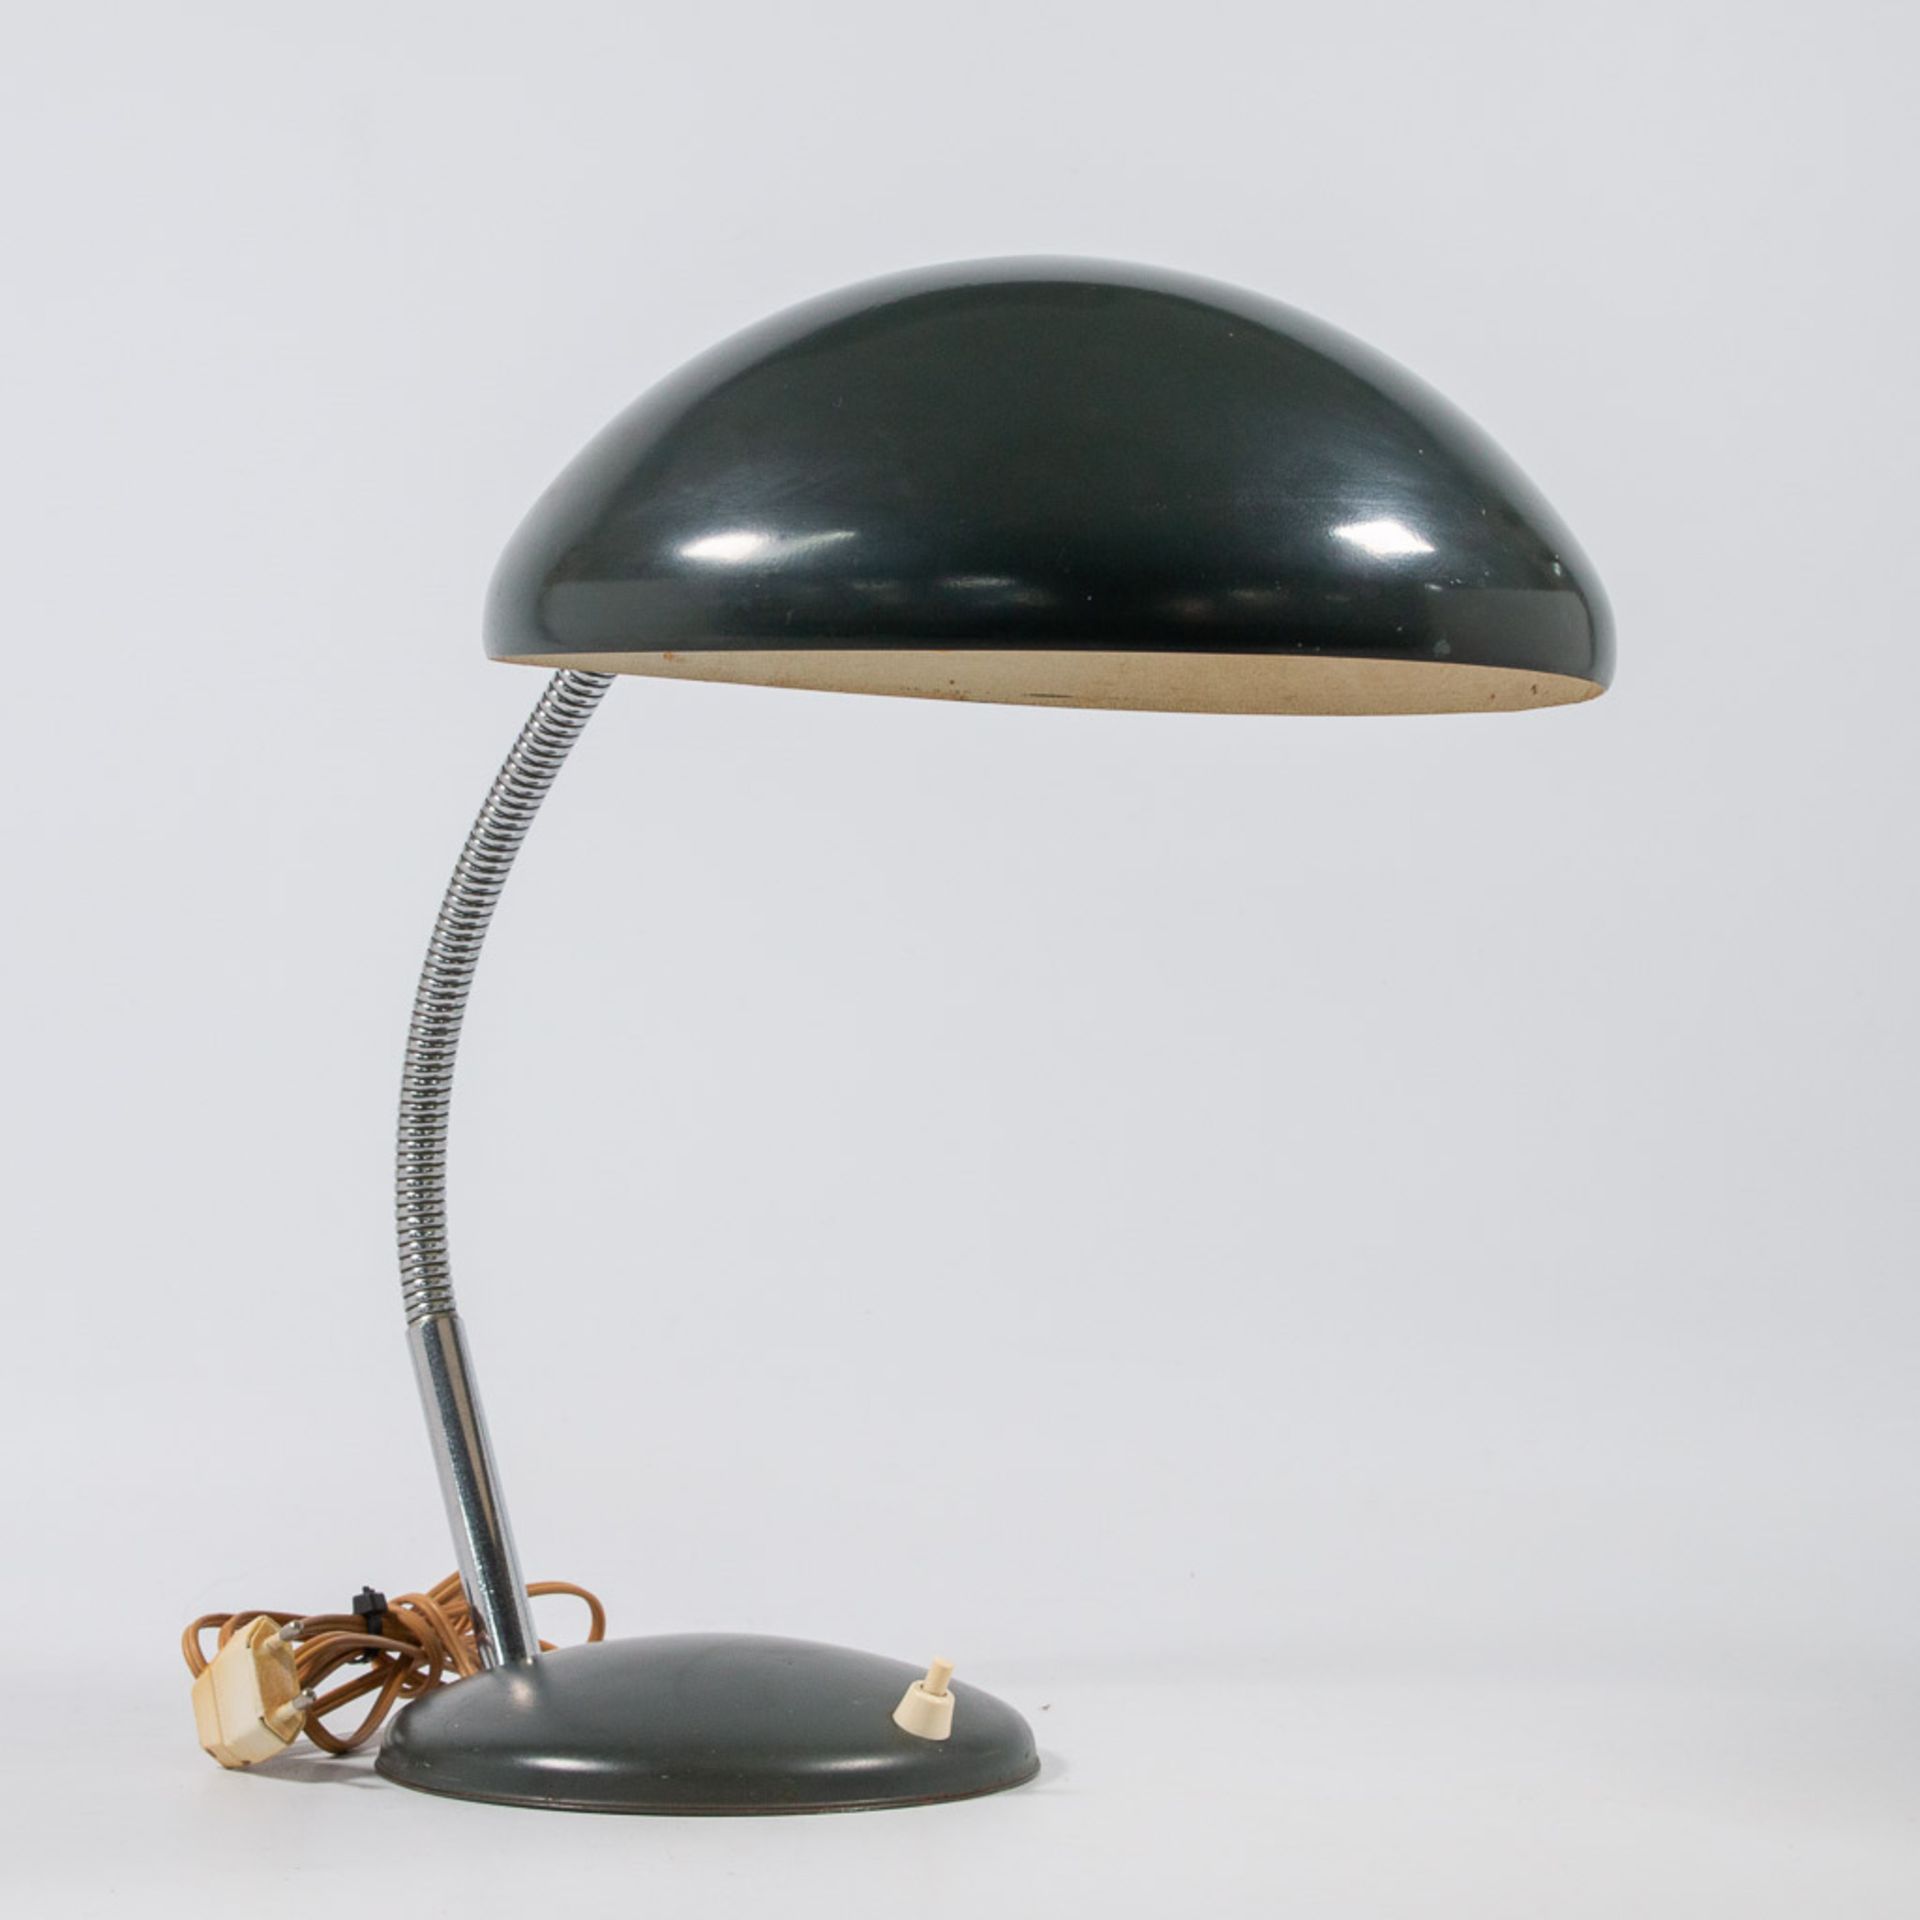 A 1950's desk lamp